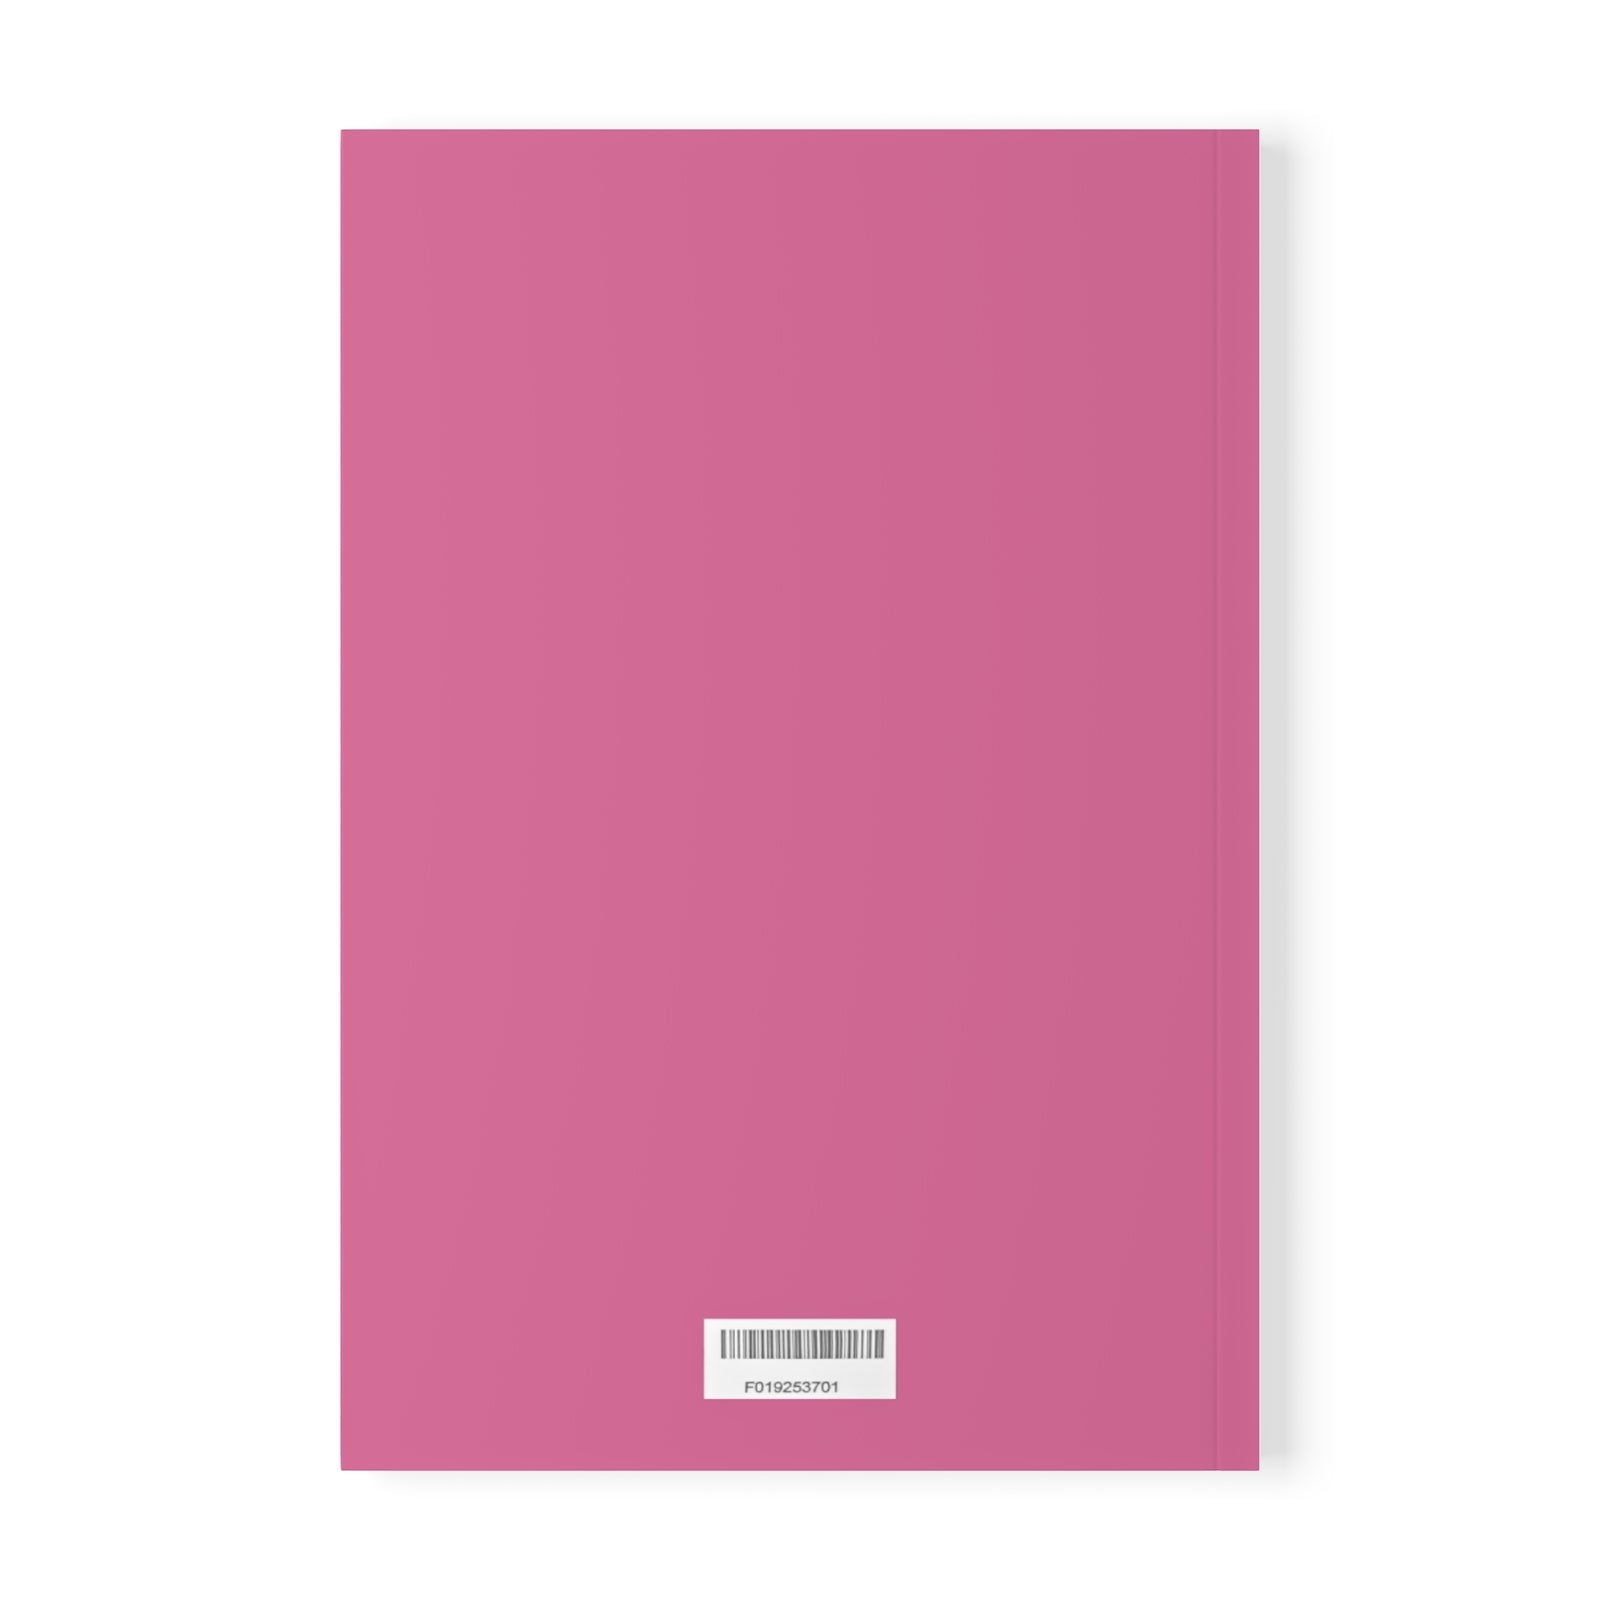 It's Got Pockets Print Pink Softcover A5 Notebook | Bright Pink Notebook Journal